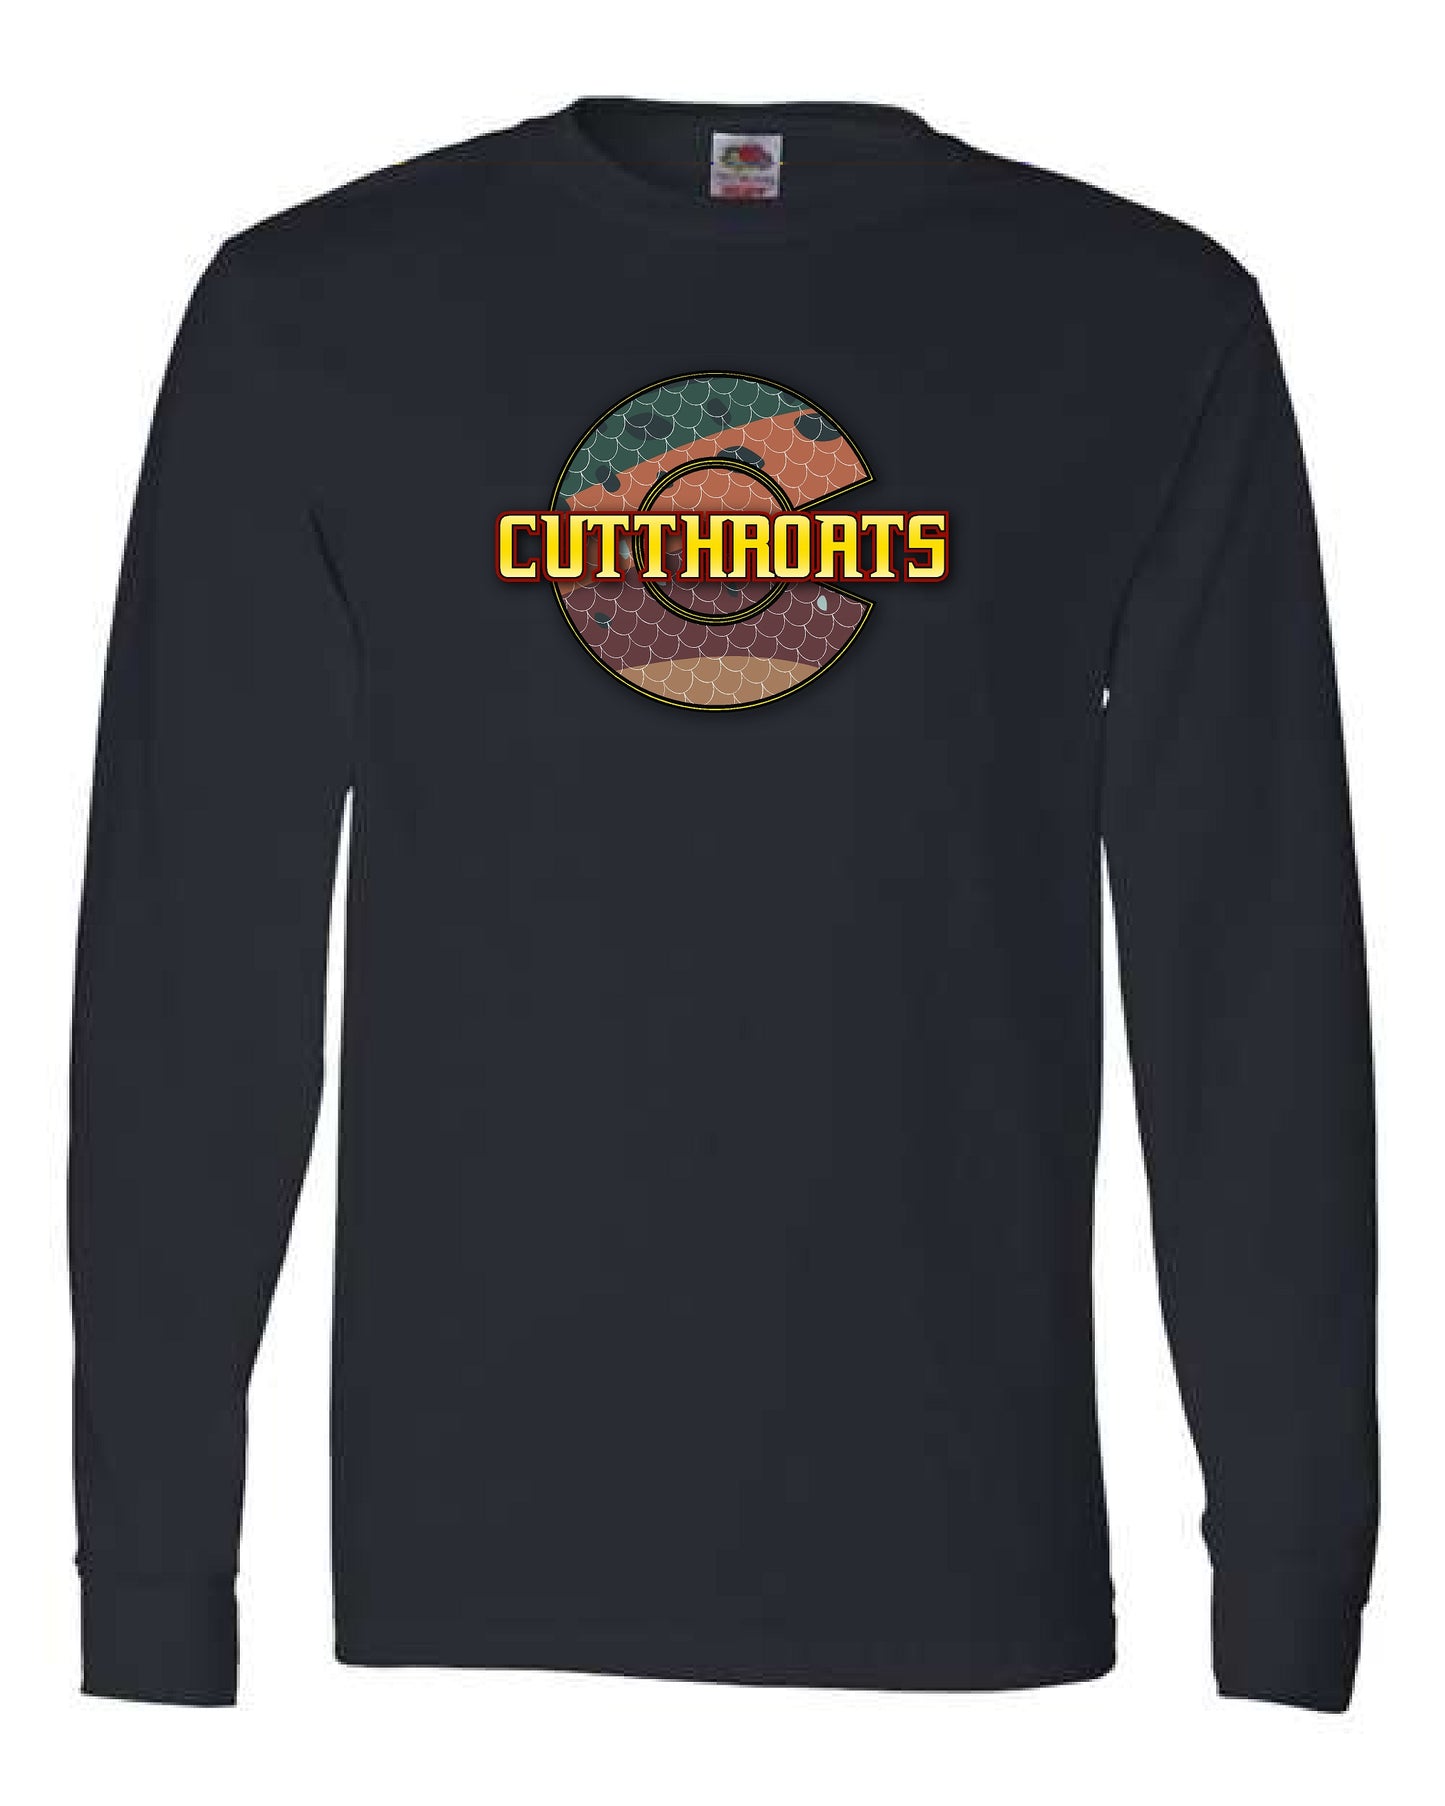 CUTTHROATS - Cotton Feel Long Sleeve Tshirt Black